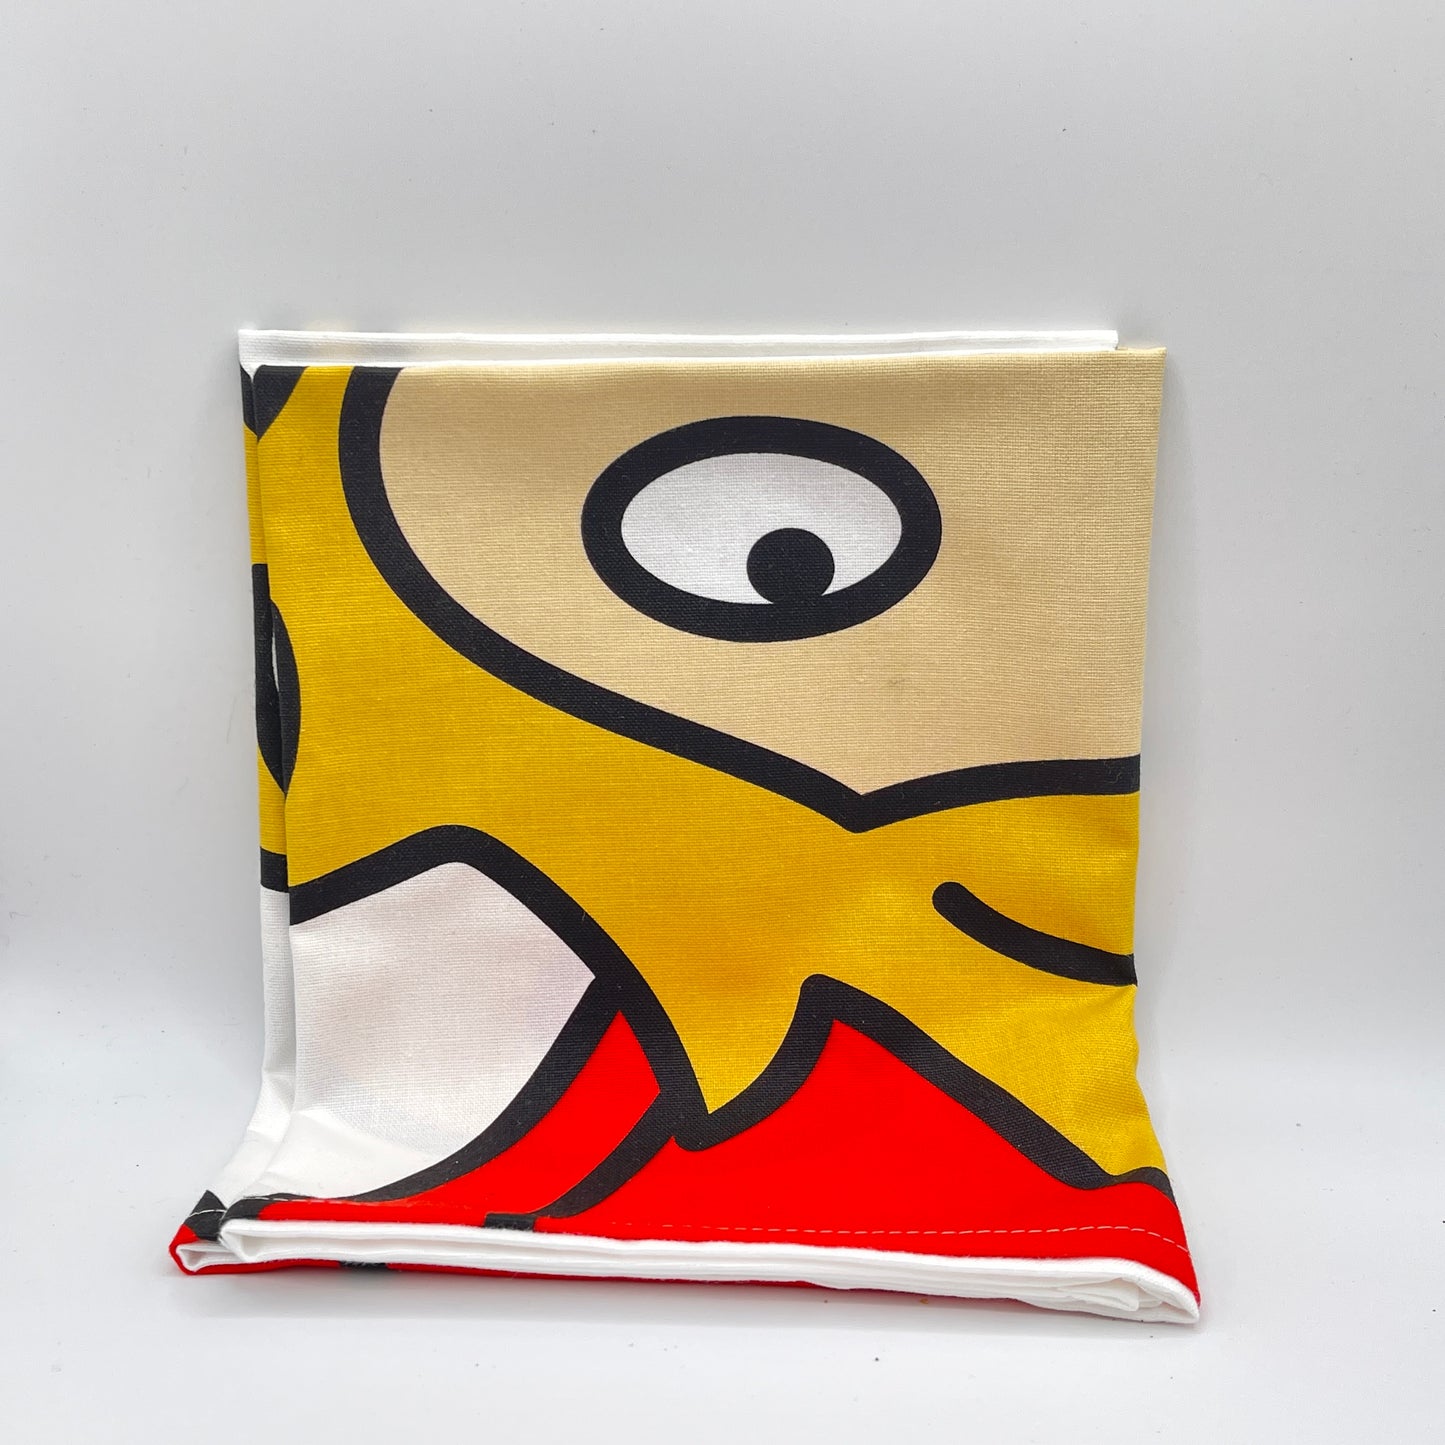 Tea Towel with Knutti the Viking Design